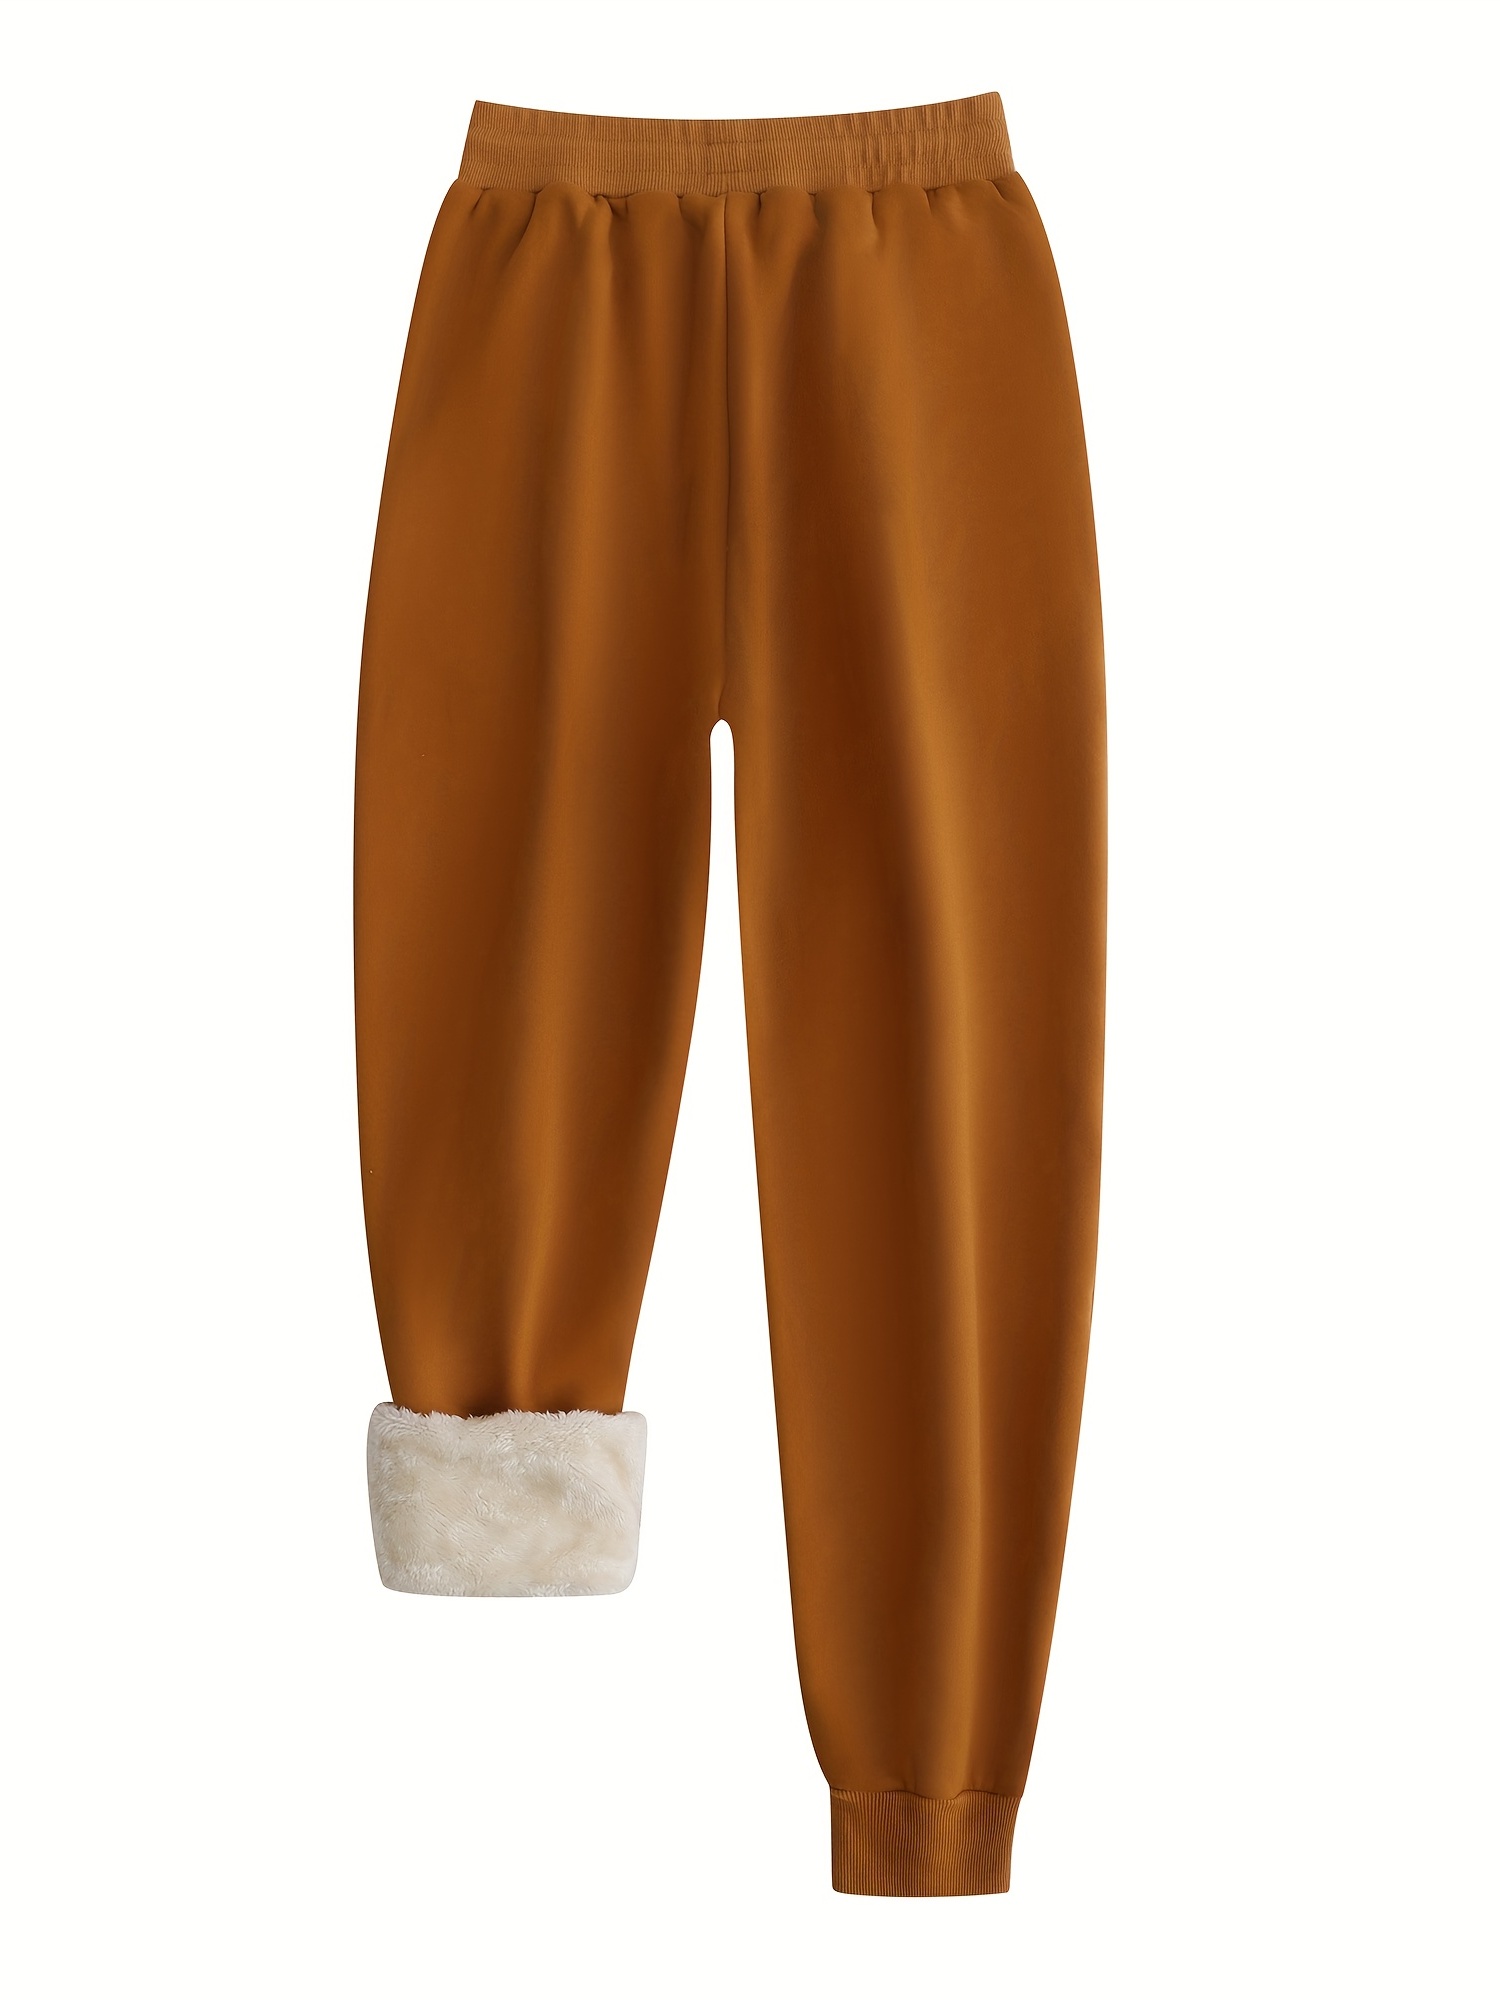 plush thermal pants, winter plush thermal pants casual drawstring pocket pants womens clothing details 15